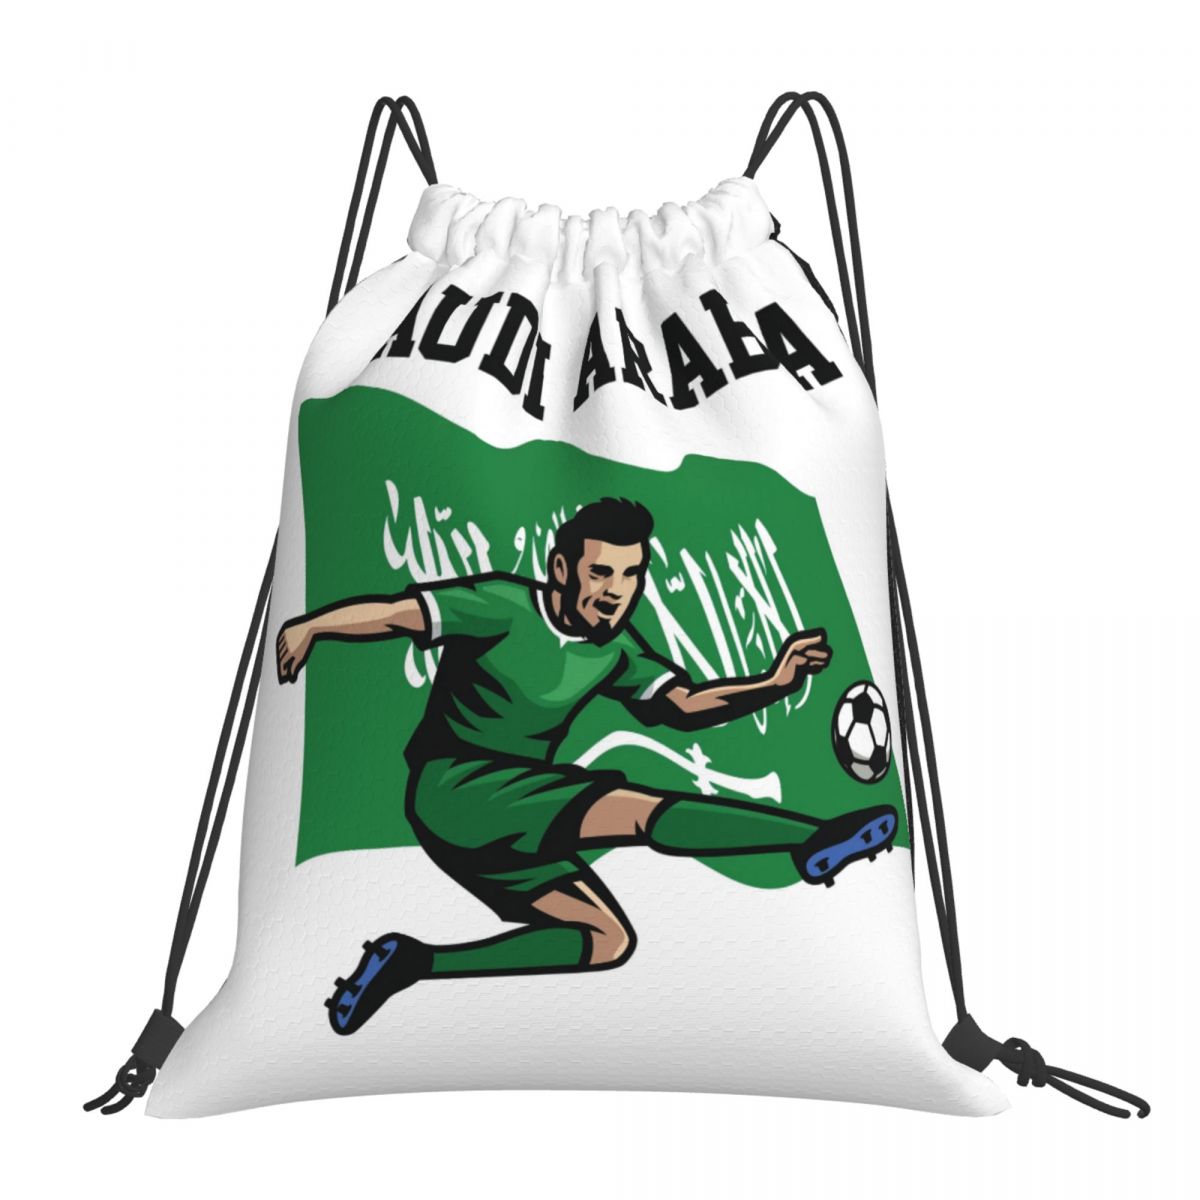 Saudi Arabia Soccer Player Drawstring Bags for School Gym